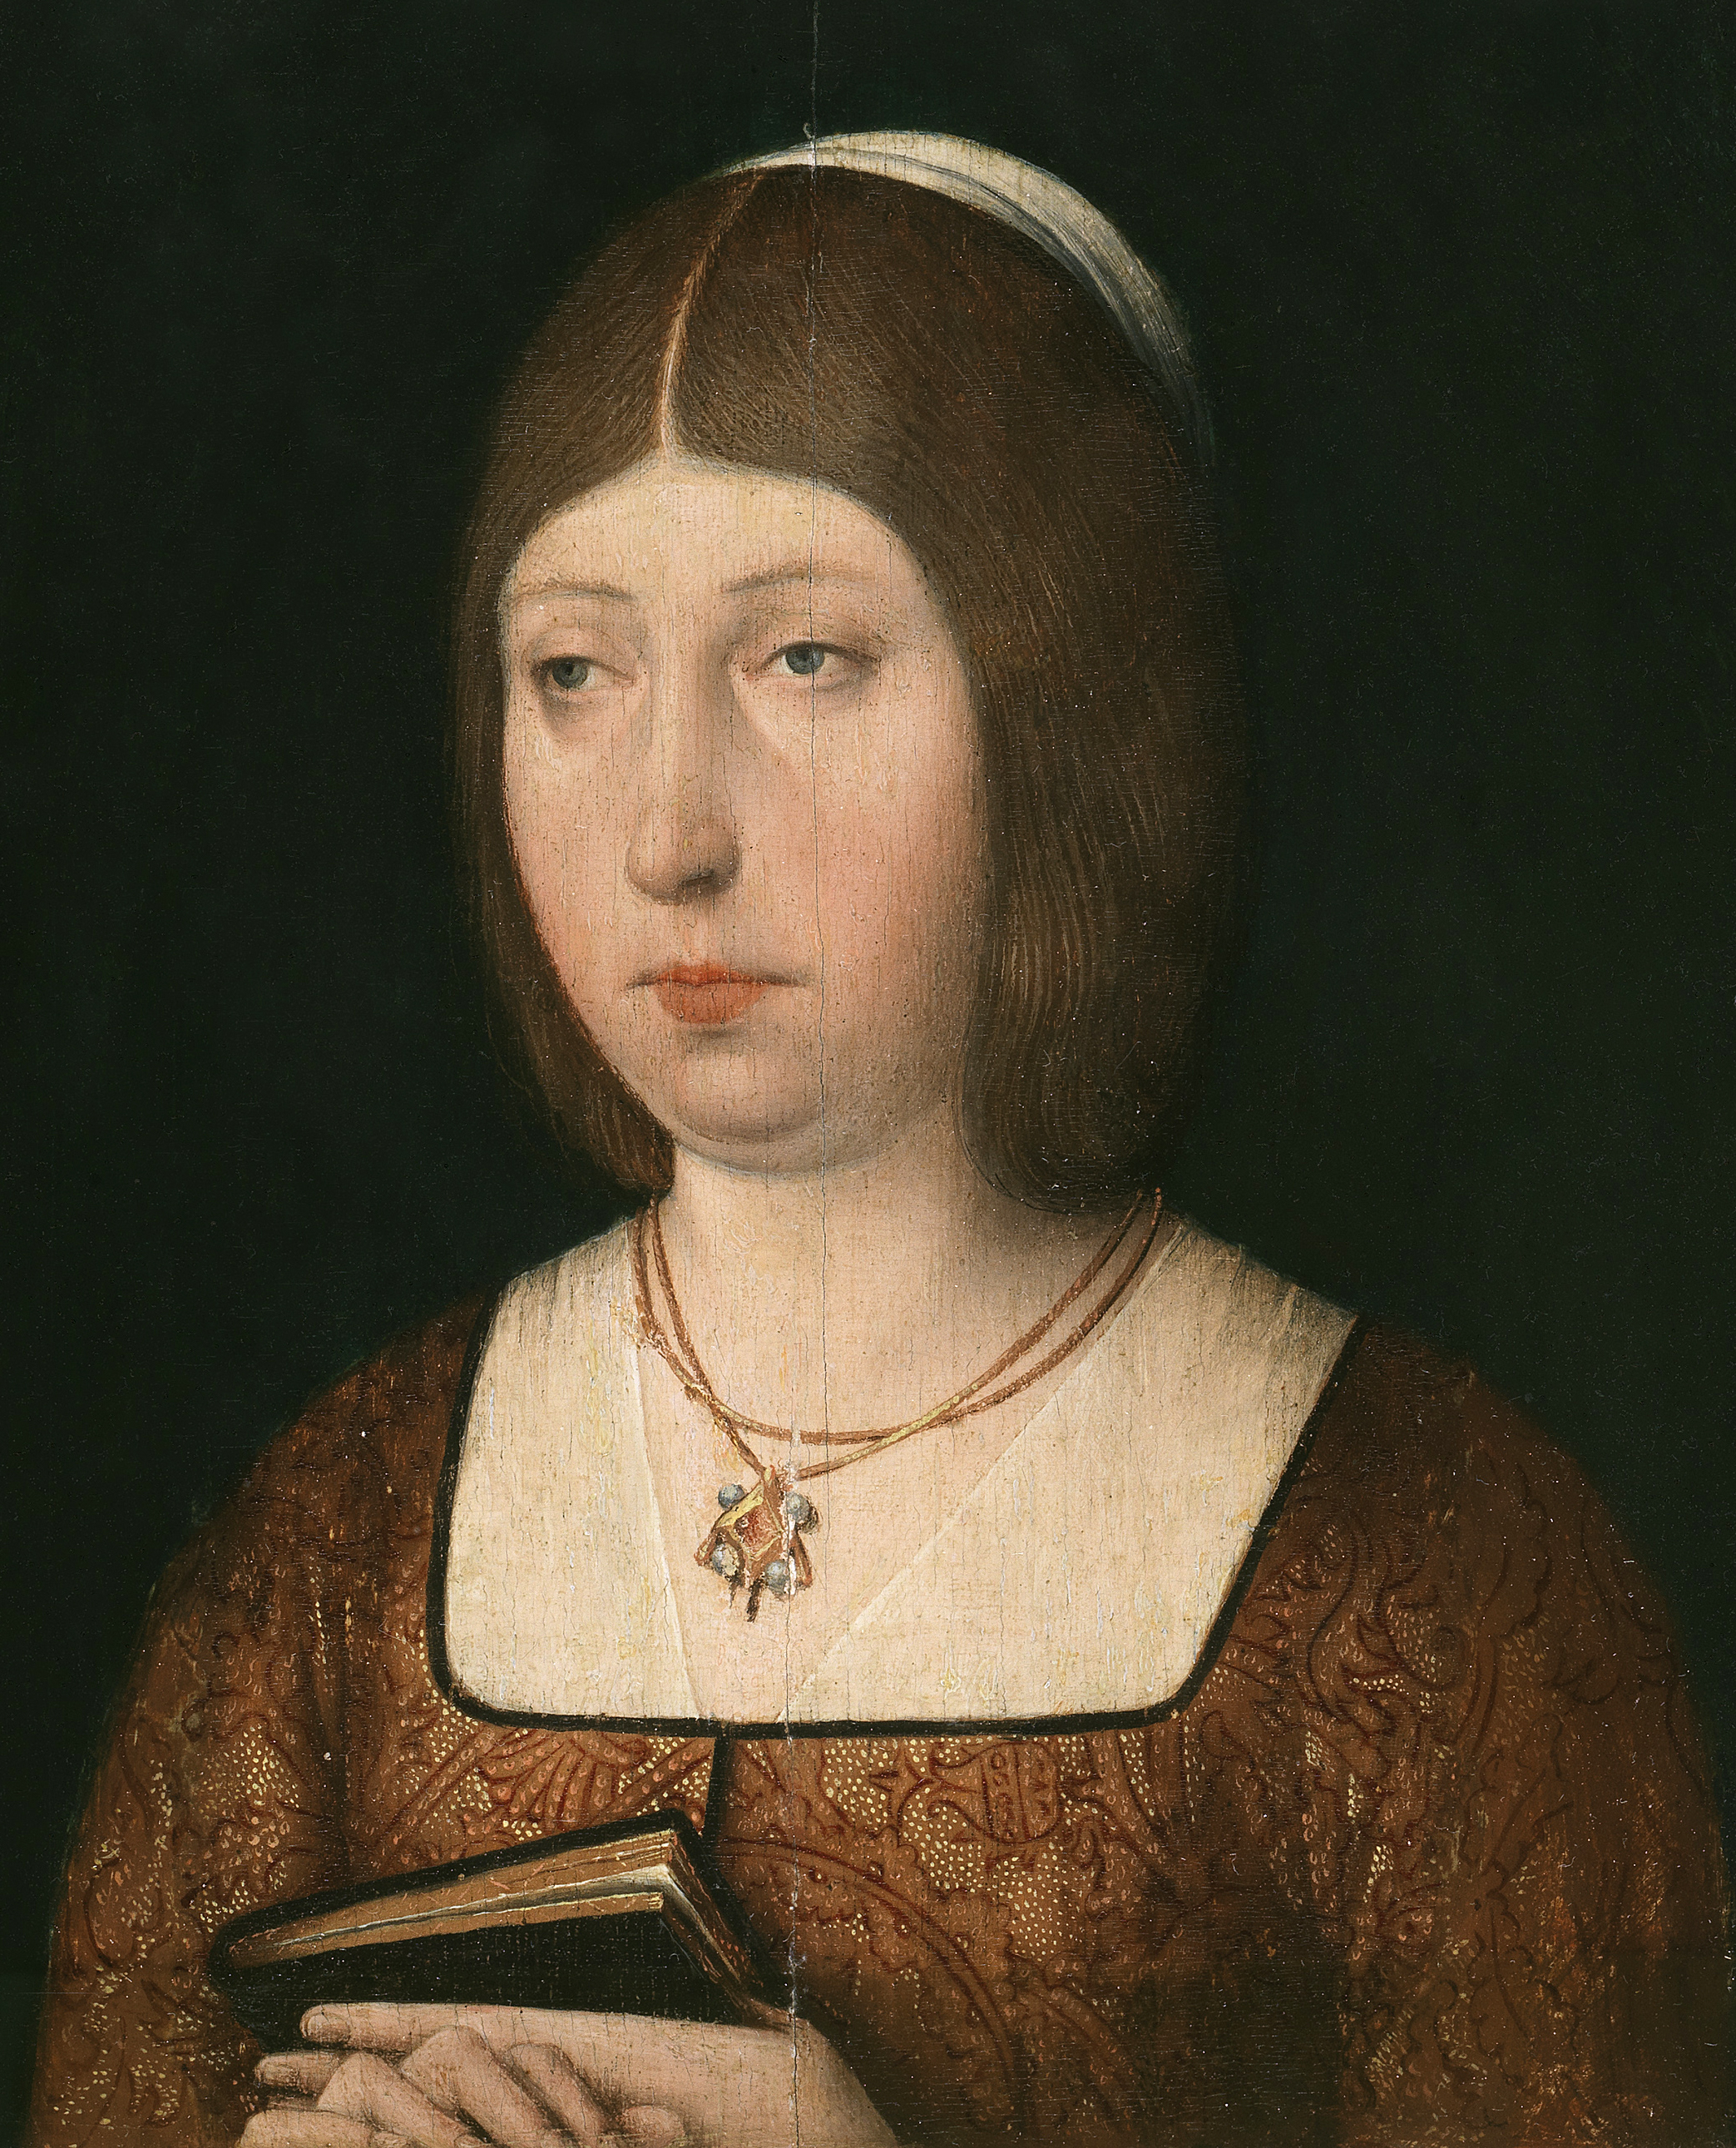 Queen Isabella I of Castile